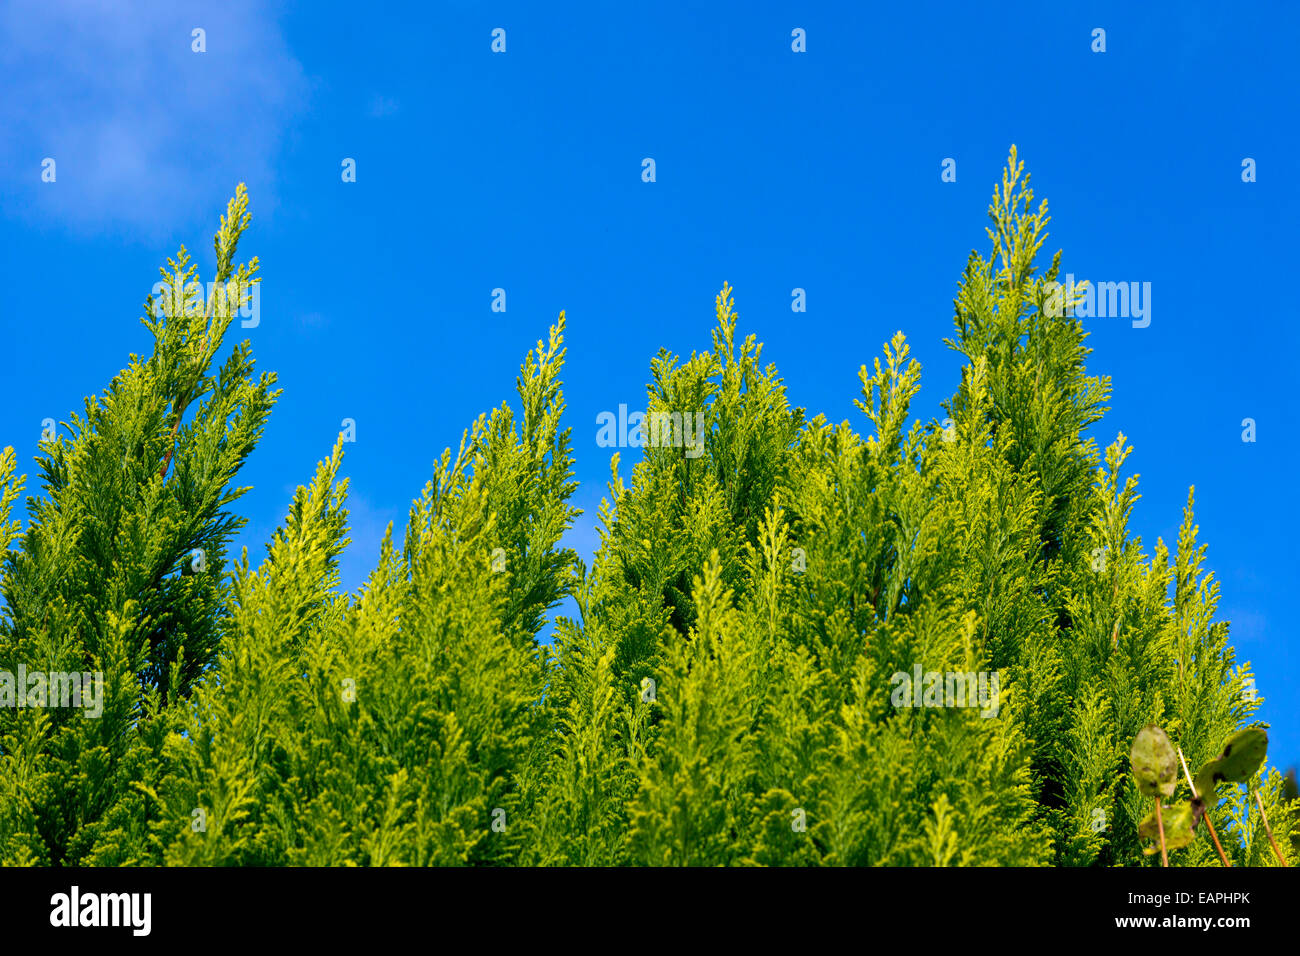 Leylandii or Leyland cypress or Cupressa leylandii, a fast growing coniferous evergreen tree with blue sky behind Stock Photo